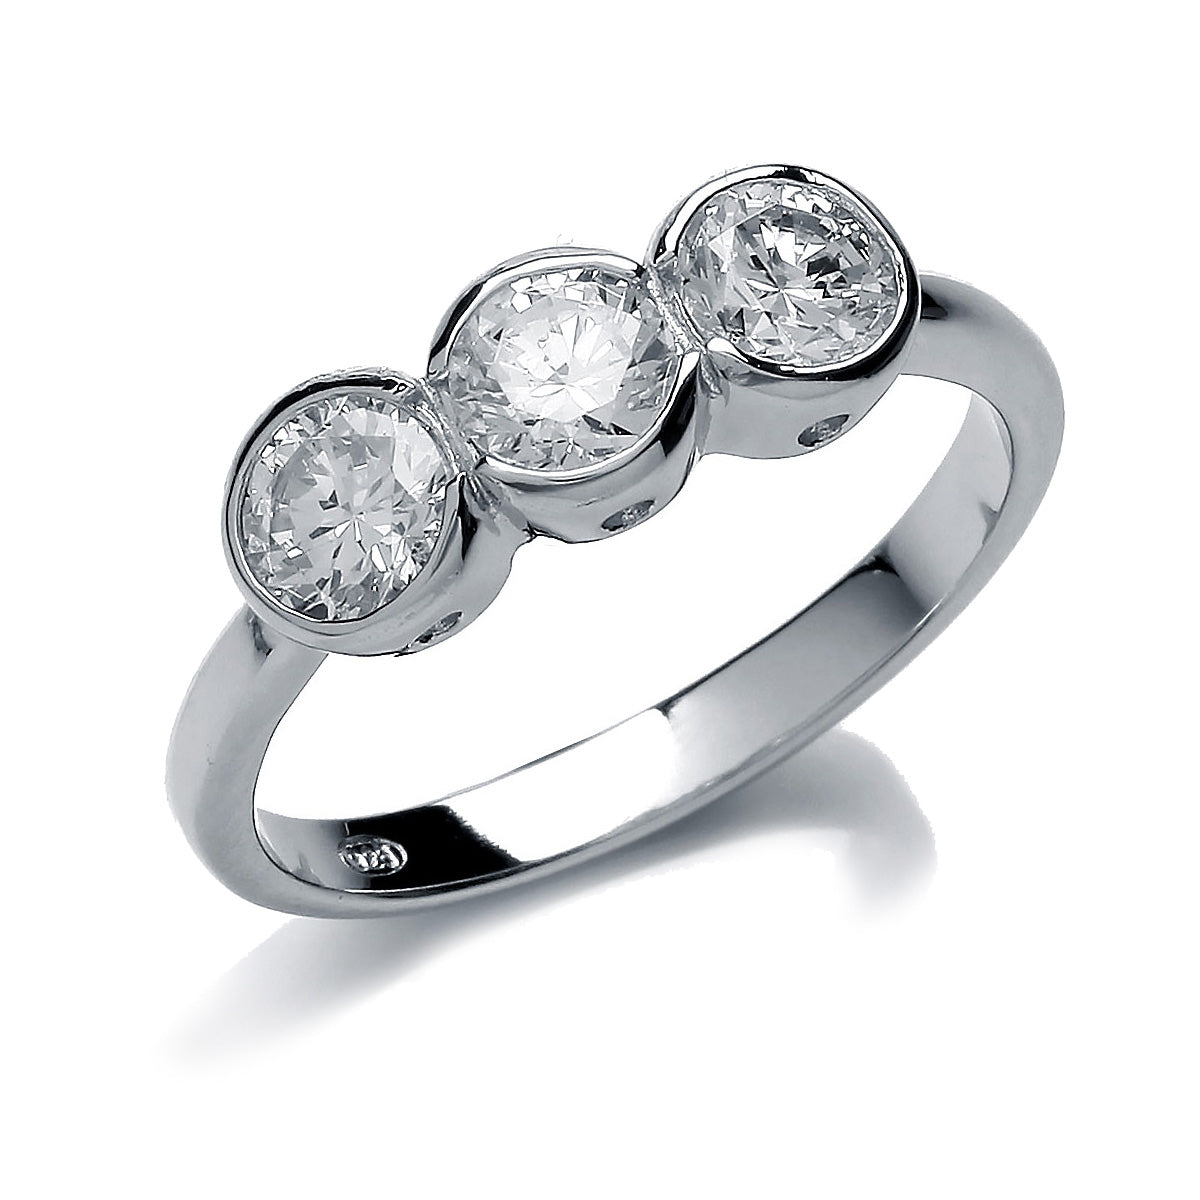 Silver  CZ Trilogy Bubbles Engagement Ring - GVR721